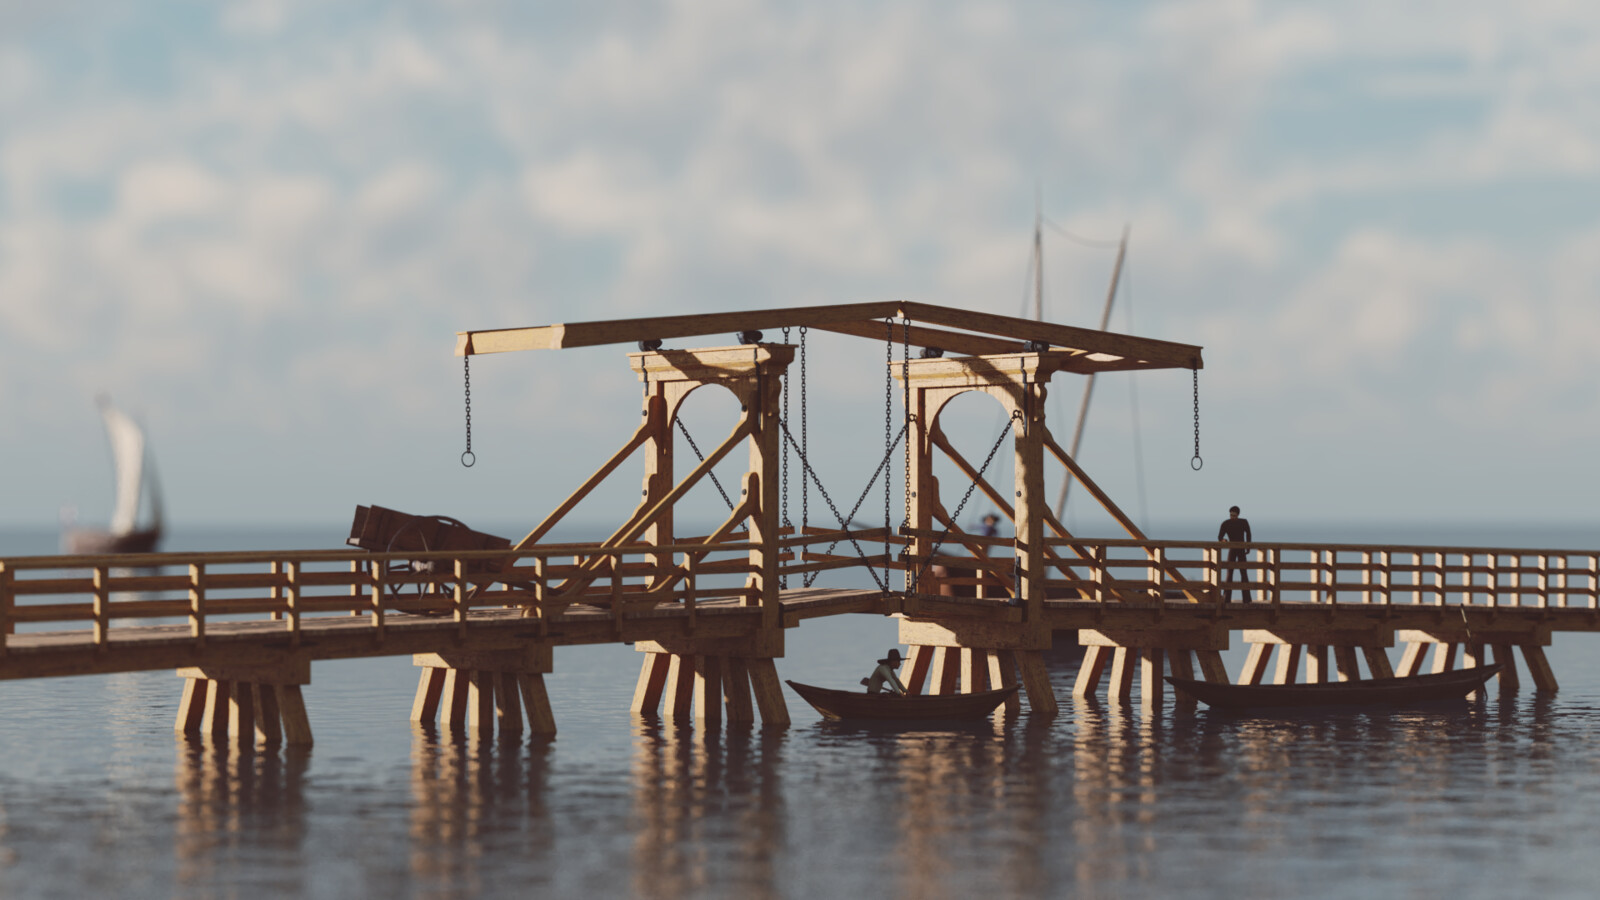 The long wooden bridge